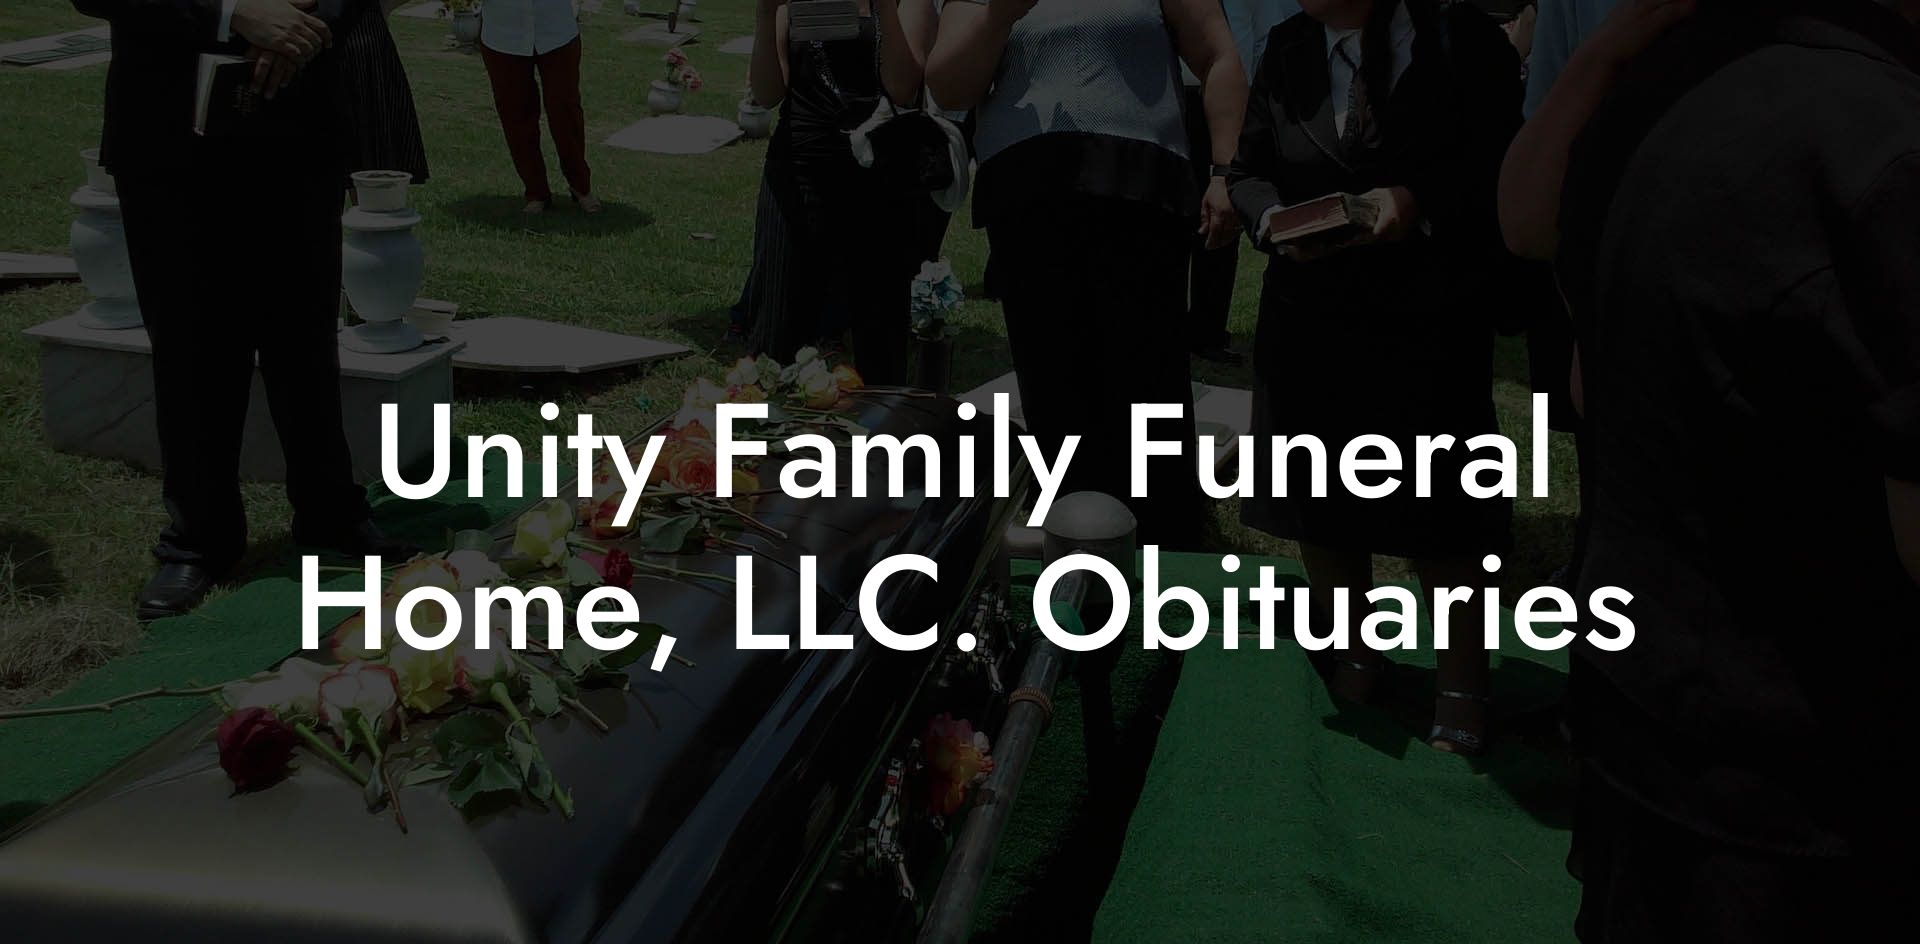 Unity Family Funeral Home, LLC. Obituaries